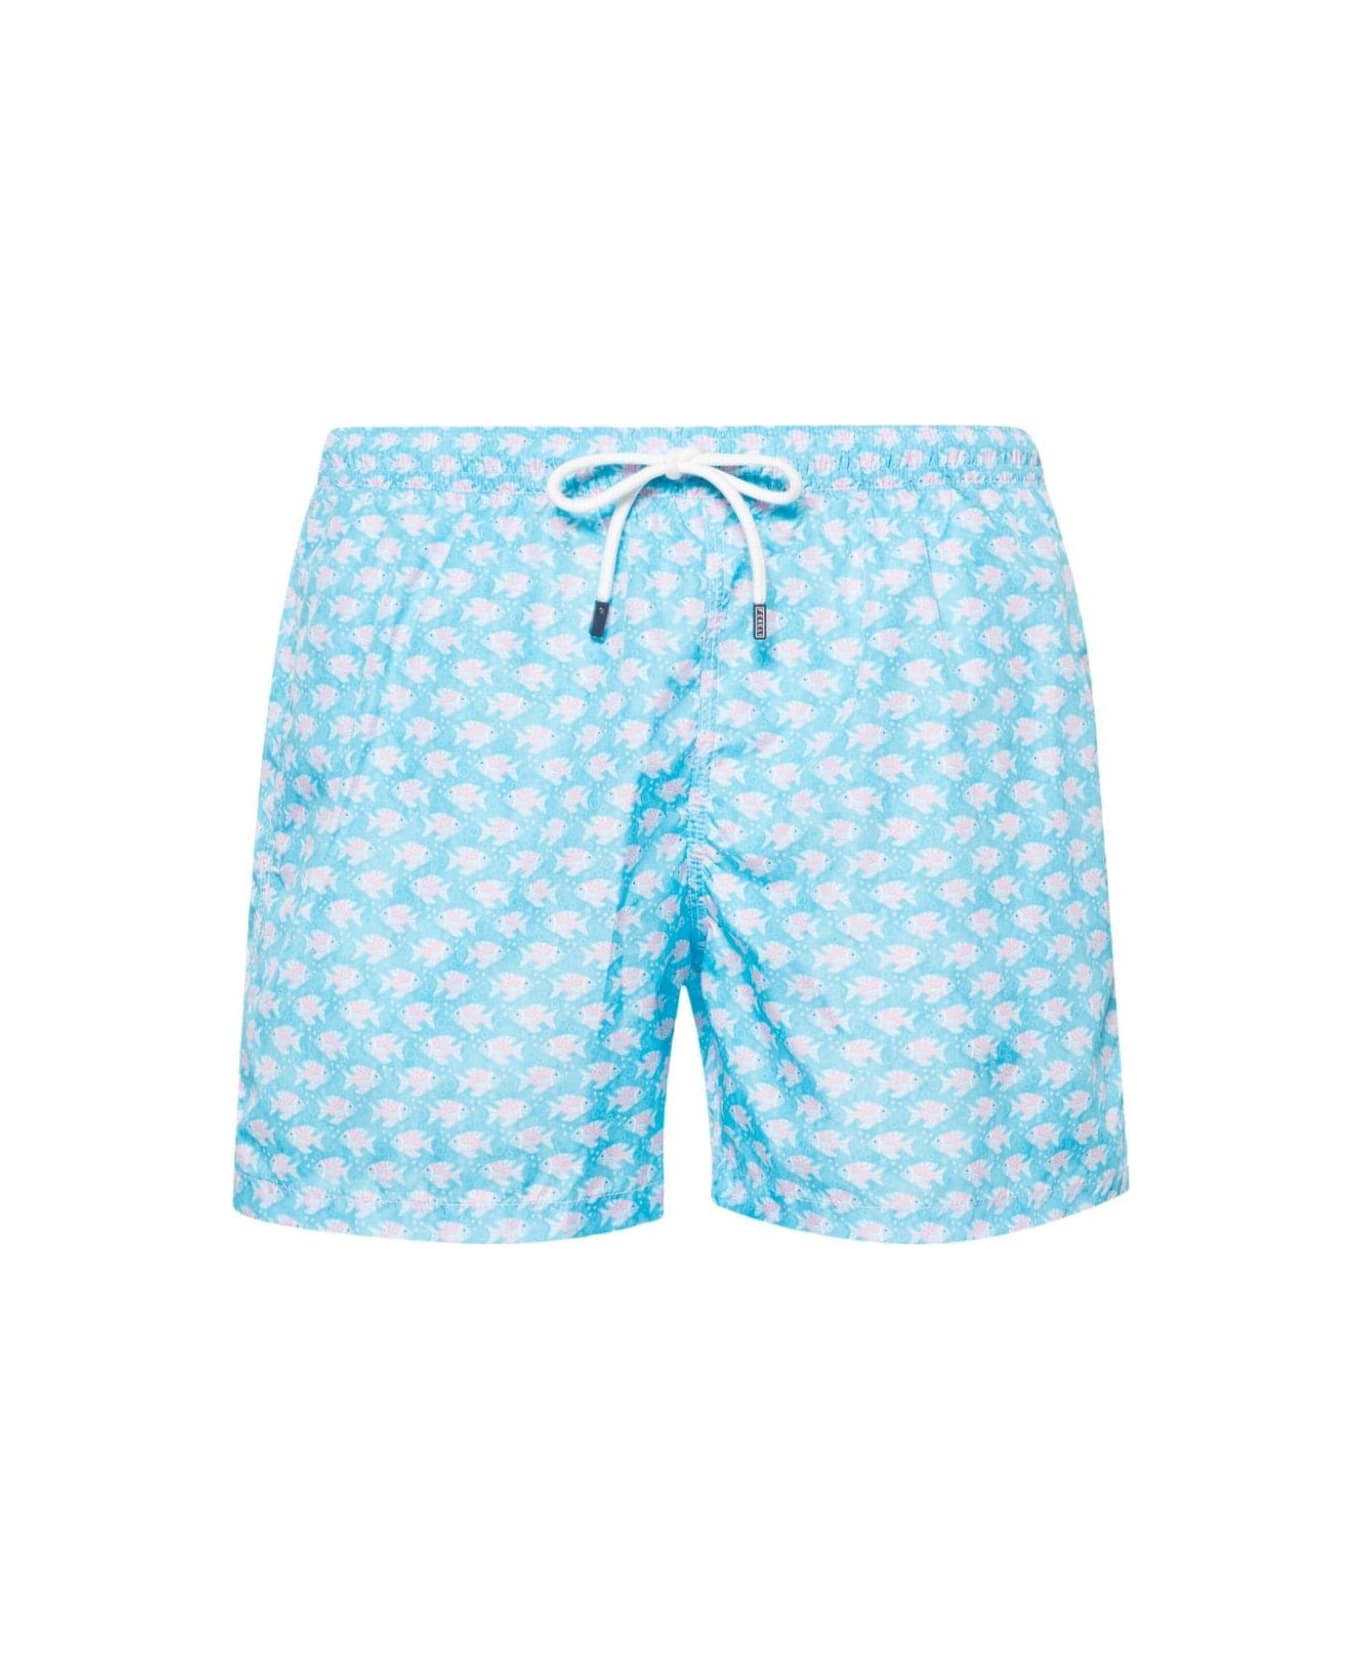 Fedeli Light Blue Swim Shorts With Pink Fish Pattern - Blue